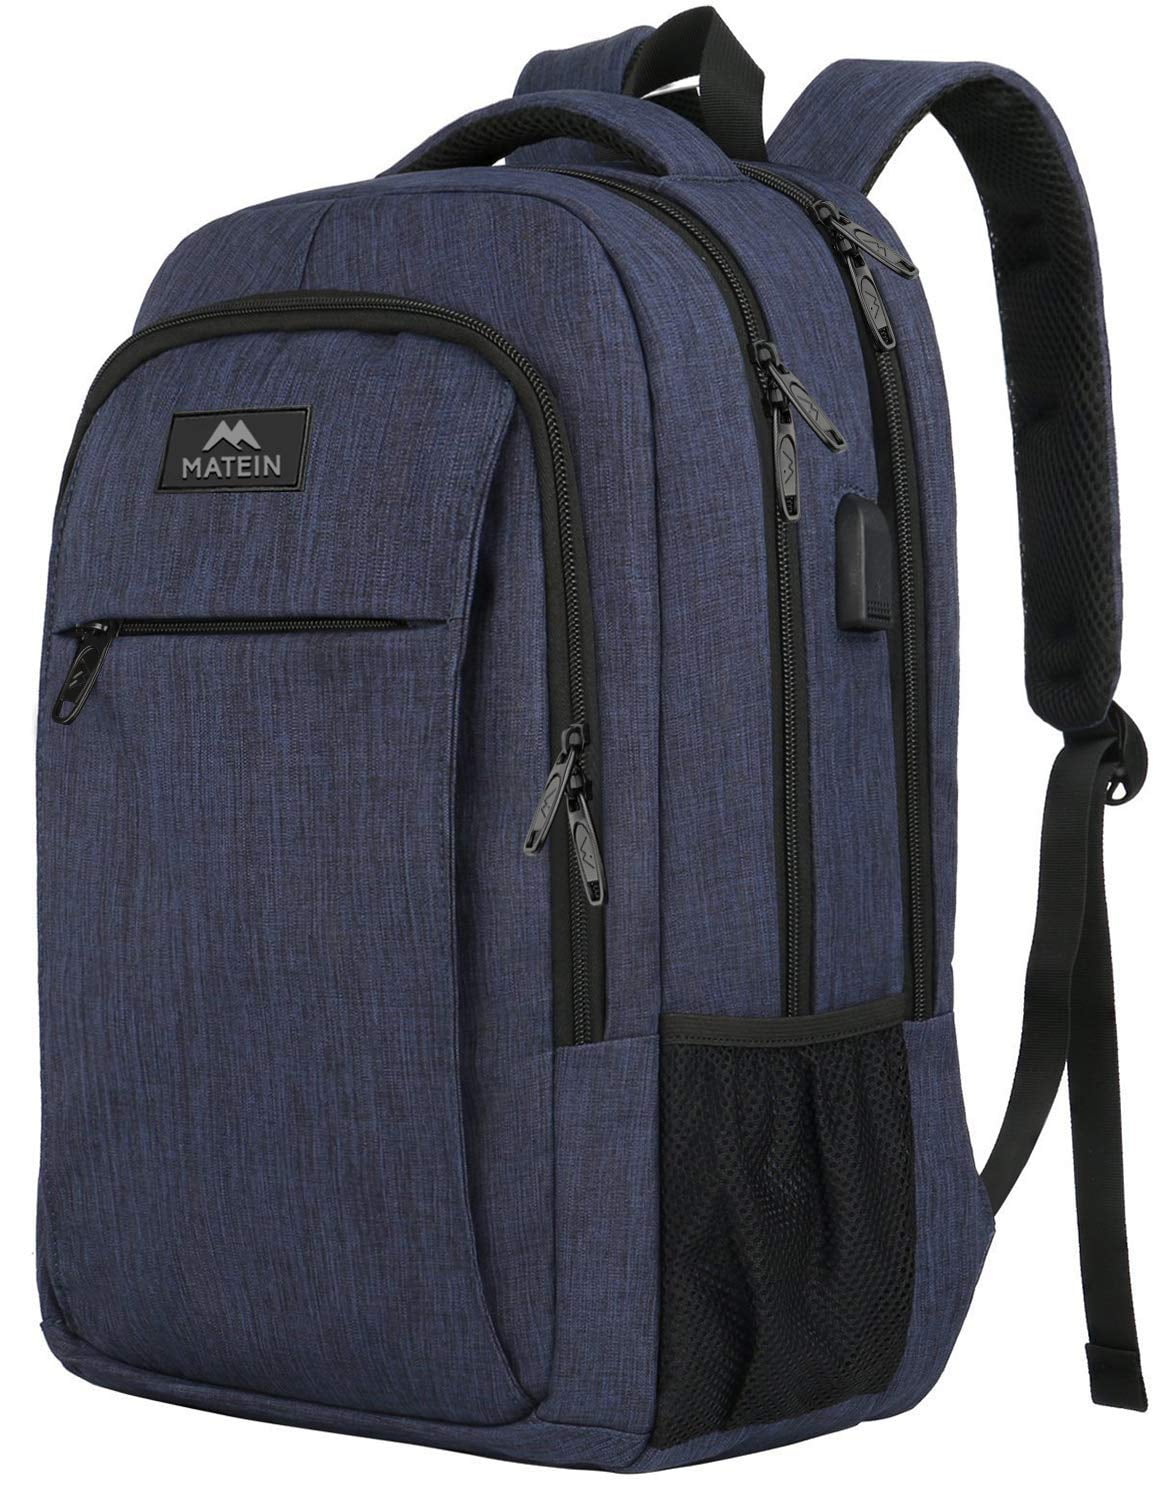 Dinosaur Casual Travel Daypack School Backpack for Women Large Diaper Bag Rucksack Bookbag for College Fits 15inch Laptop Backpack